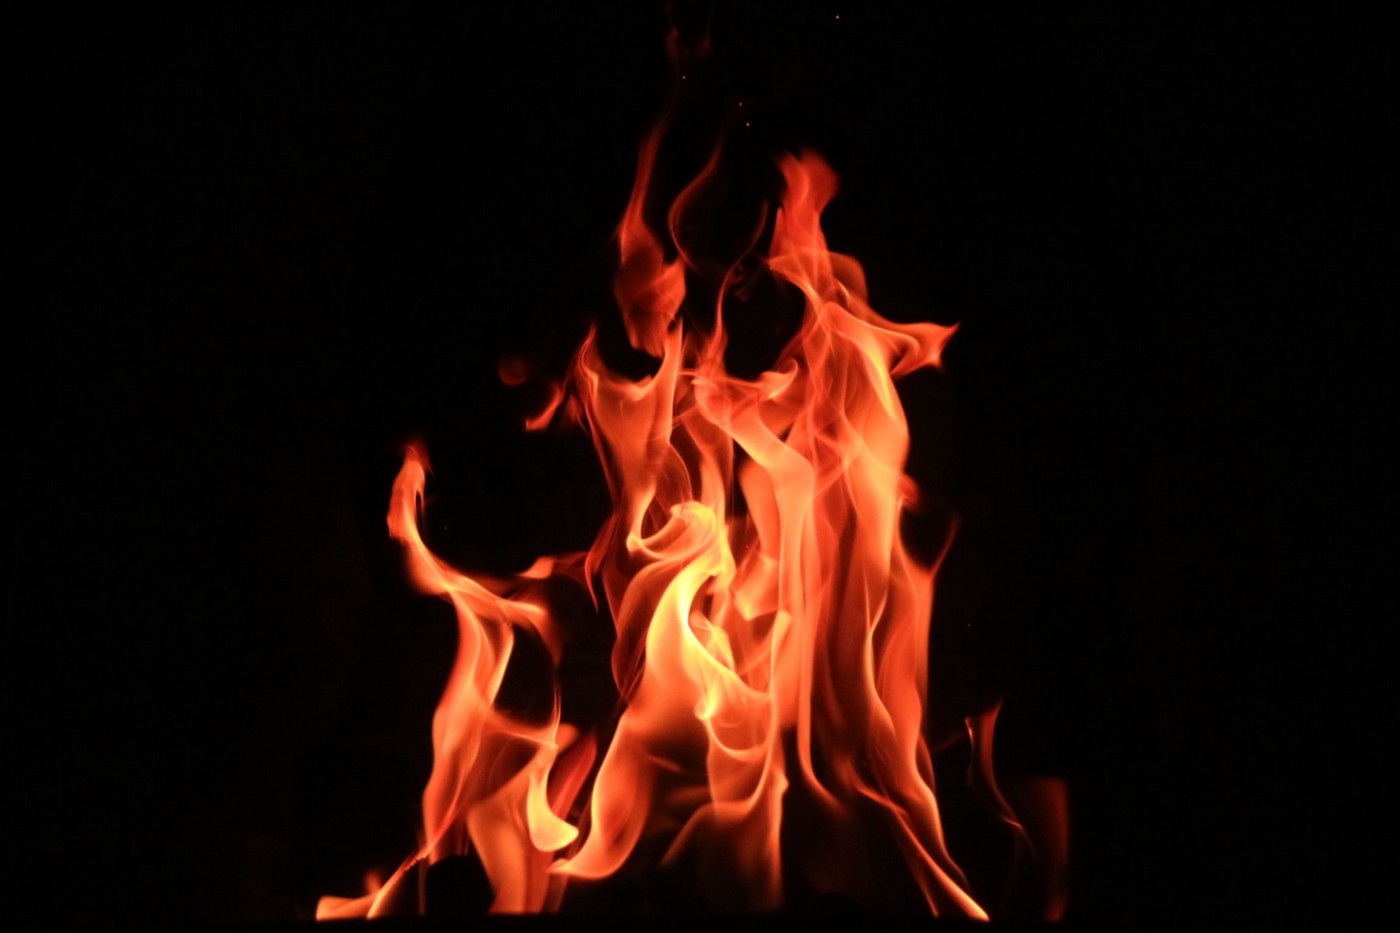 Man attempts self-immolation in Jhapa